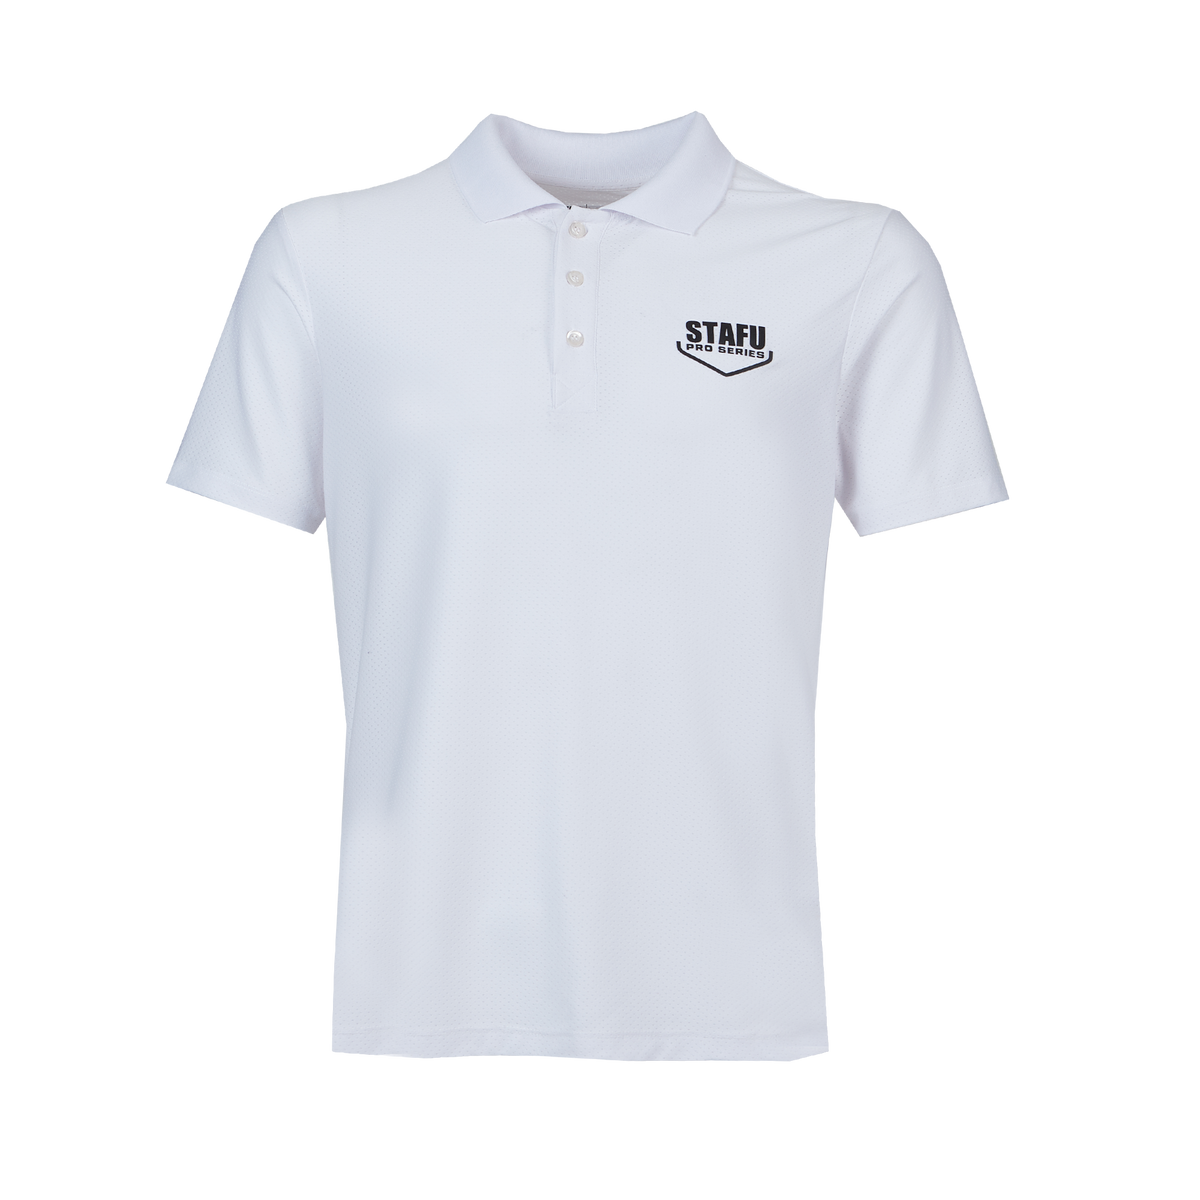 League Air Men's Short Sleeve Fisherman Sailor White UV Protected Polo Shirt